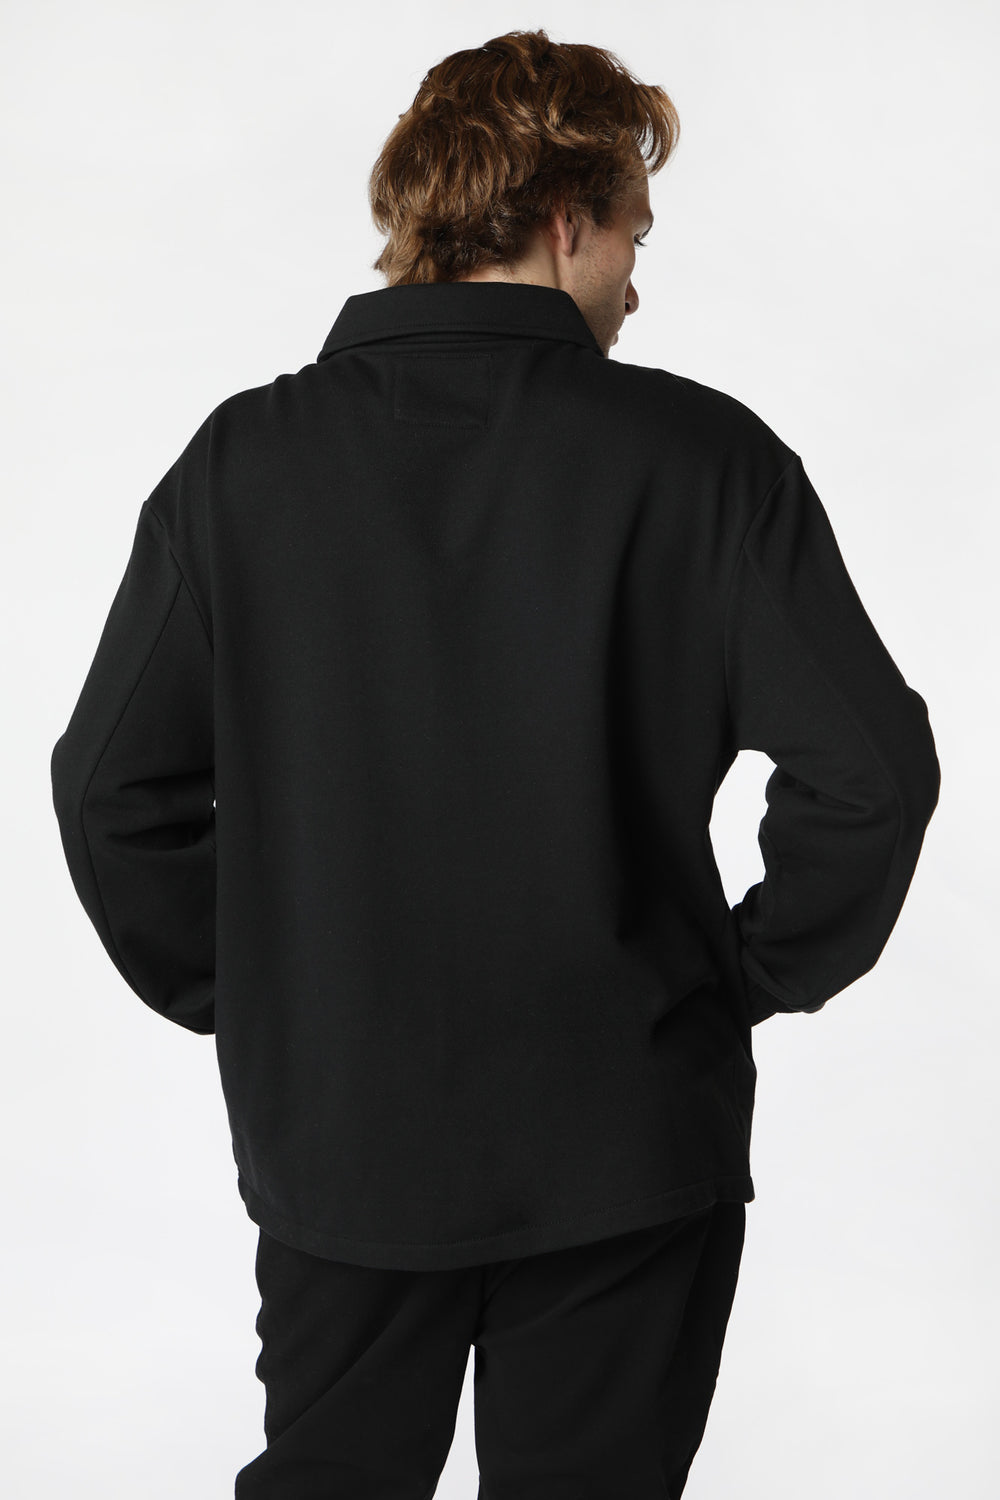 Sweatshirt de Style Coach Zoo York Homme Noir